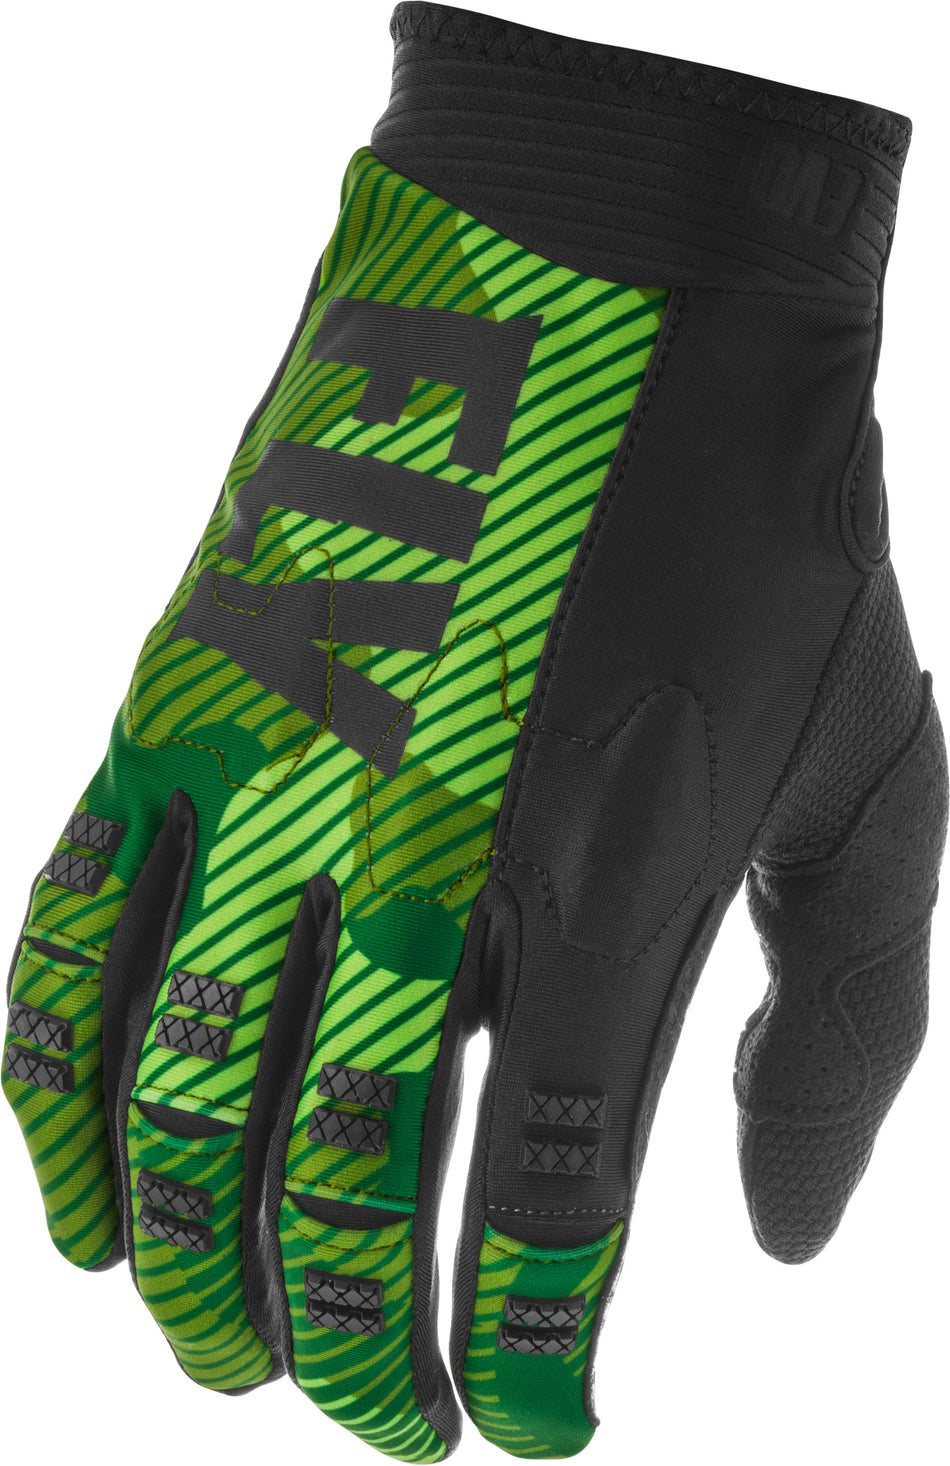 FLY RACING Evolution Gloves Green/Black Sz 13 373-11413